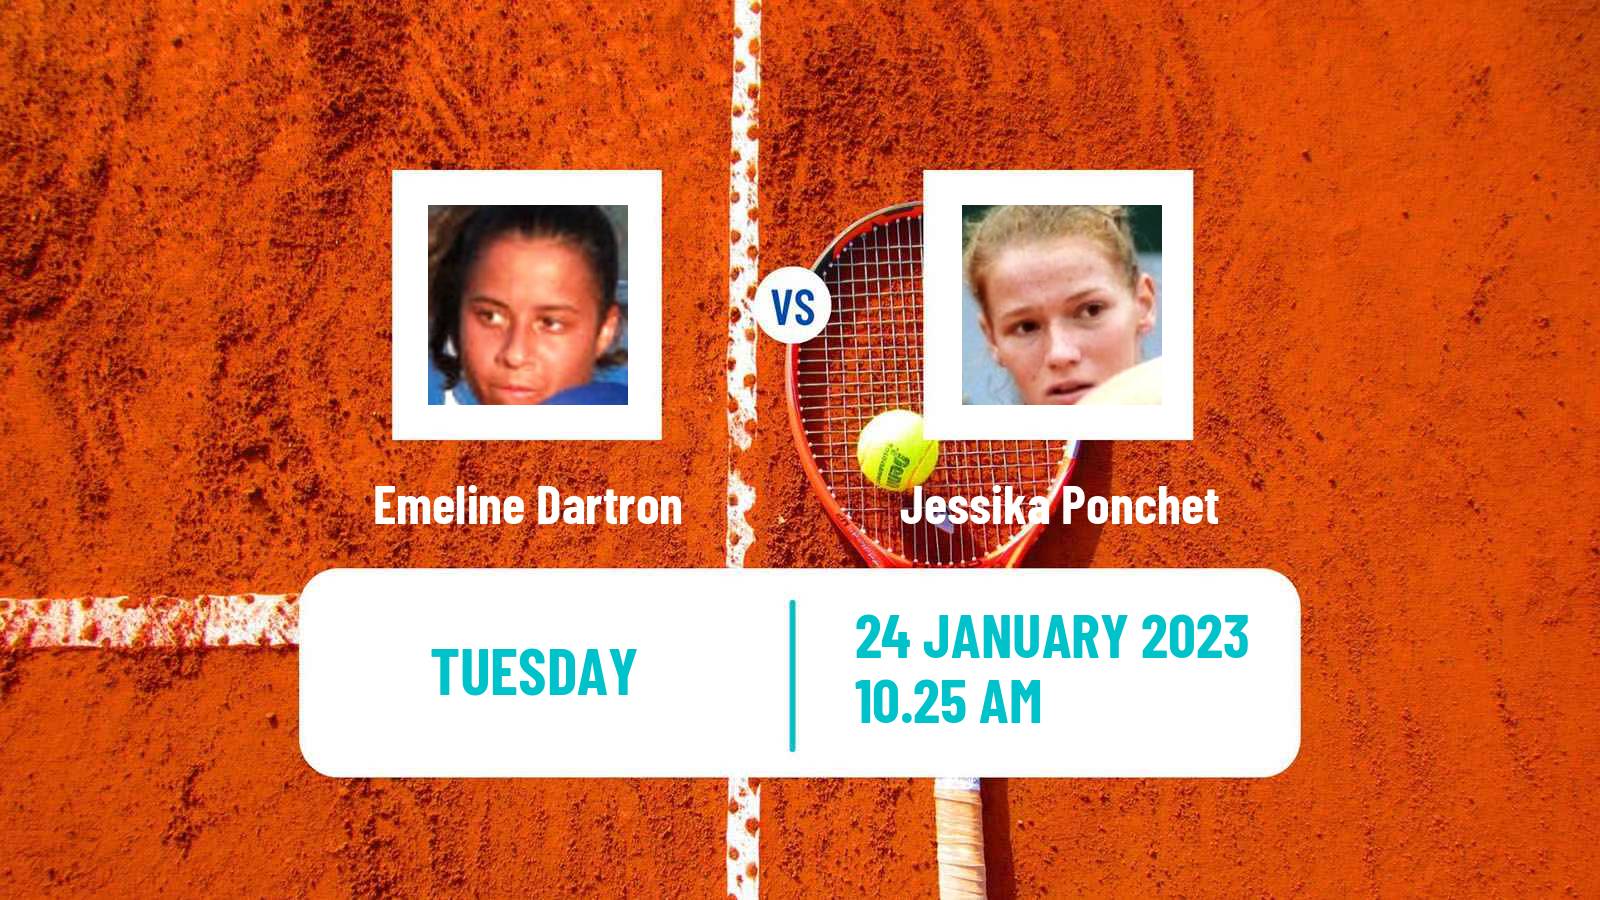 Tennis ITF Tournaments Emeline Dartron - Jessika Ponchet